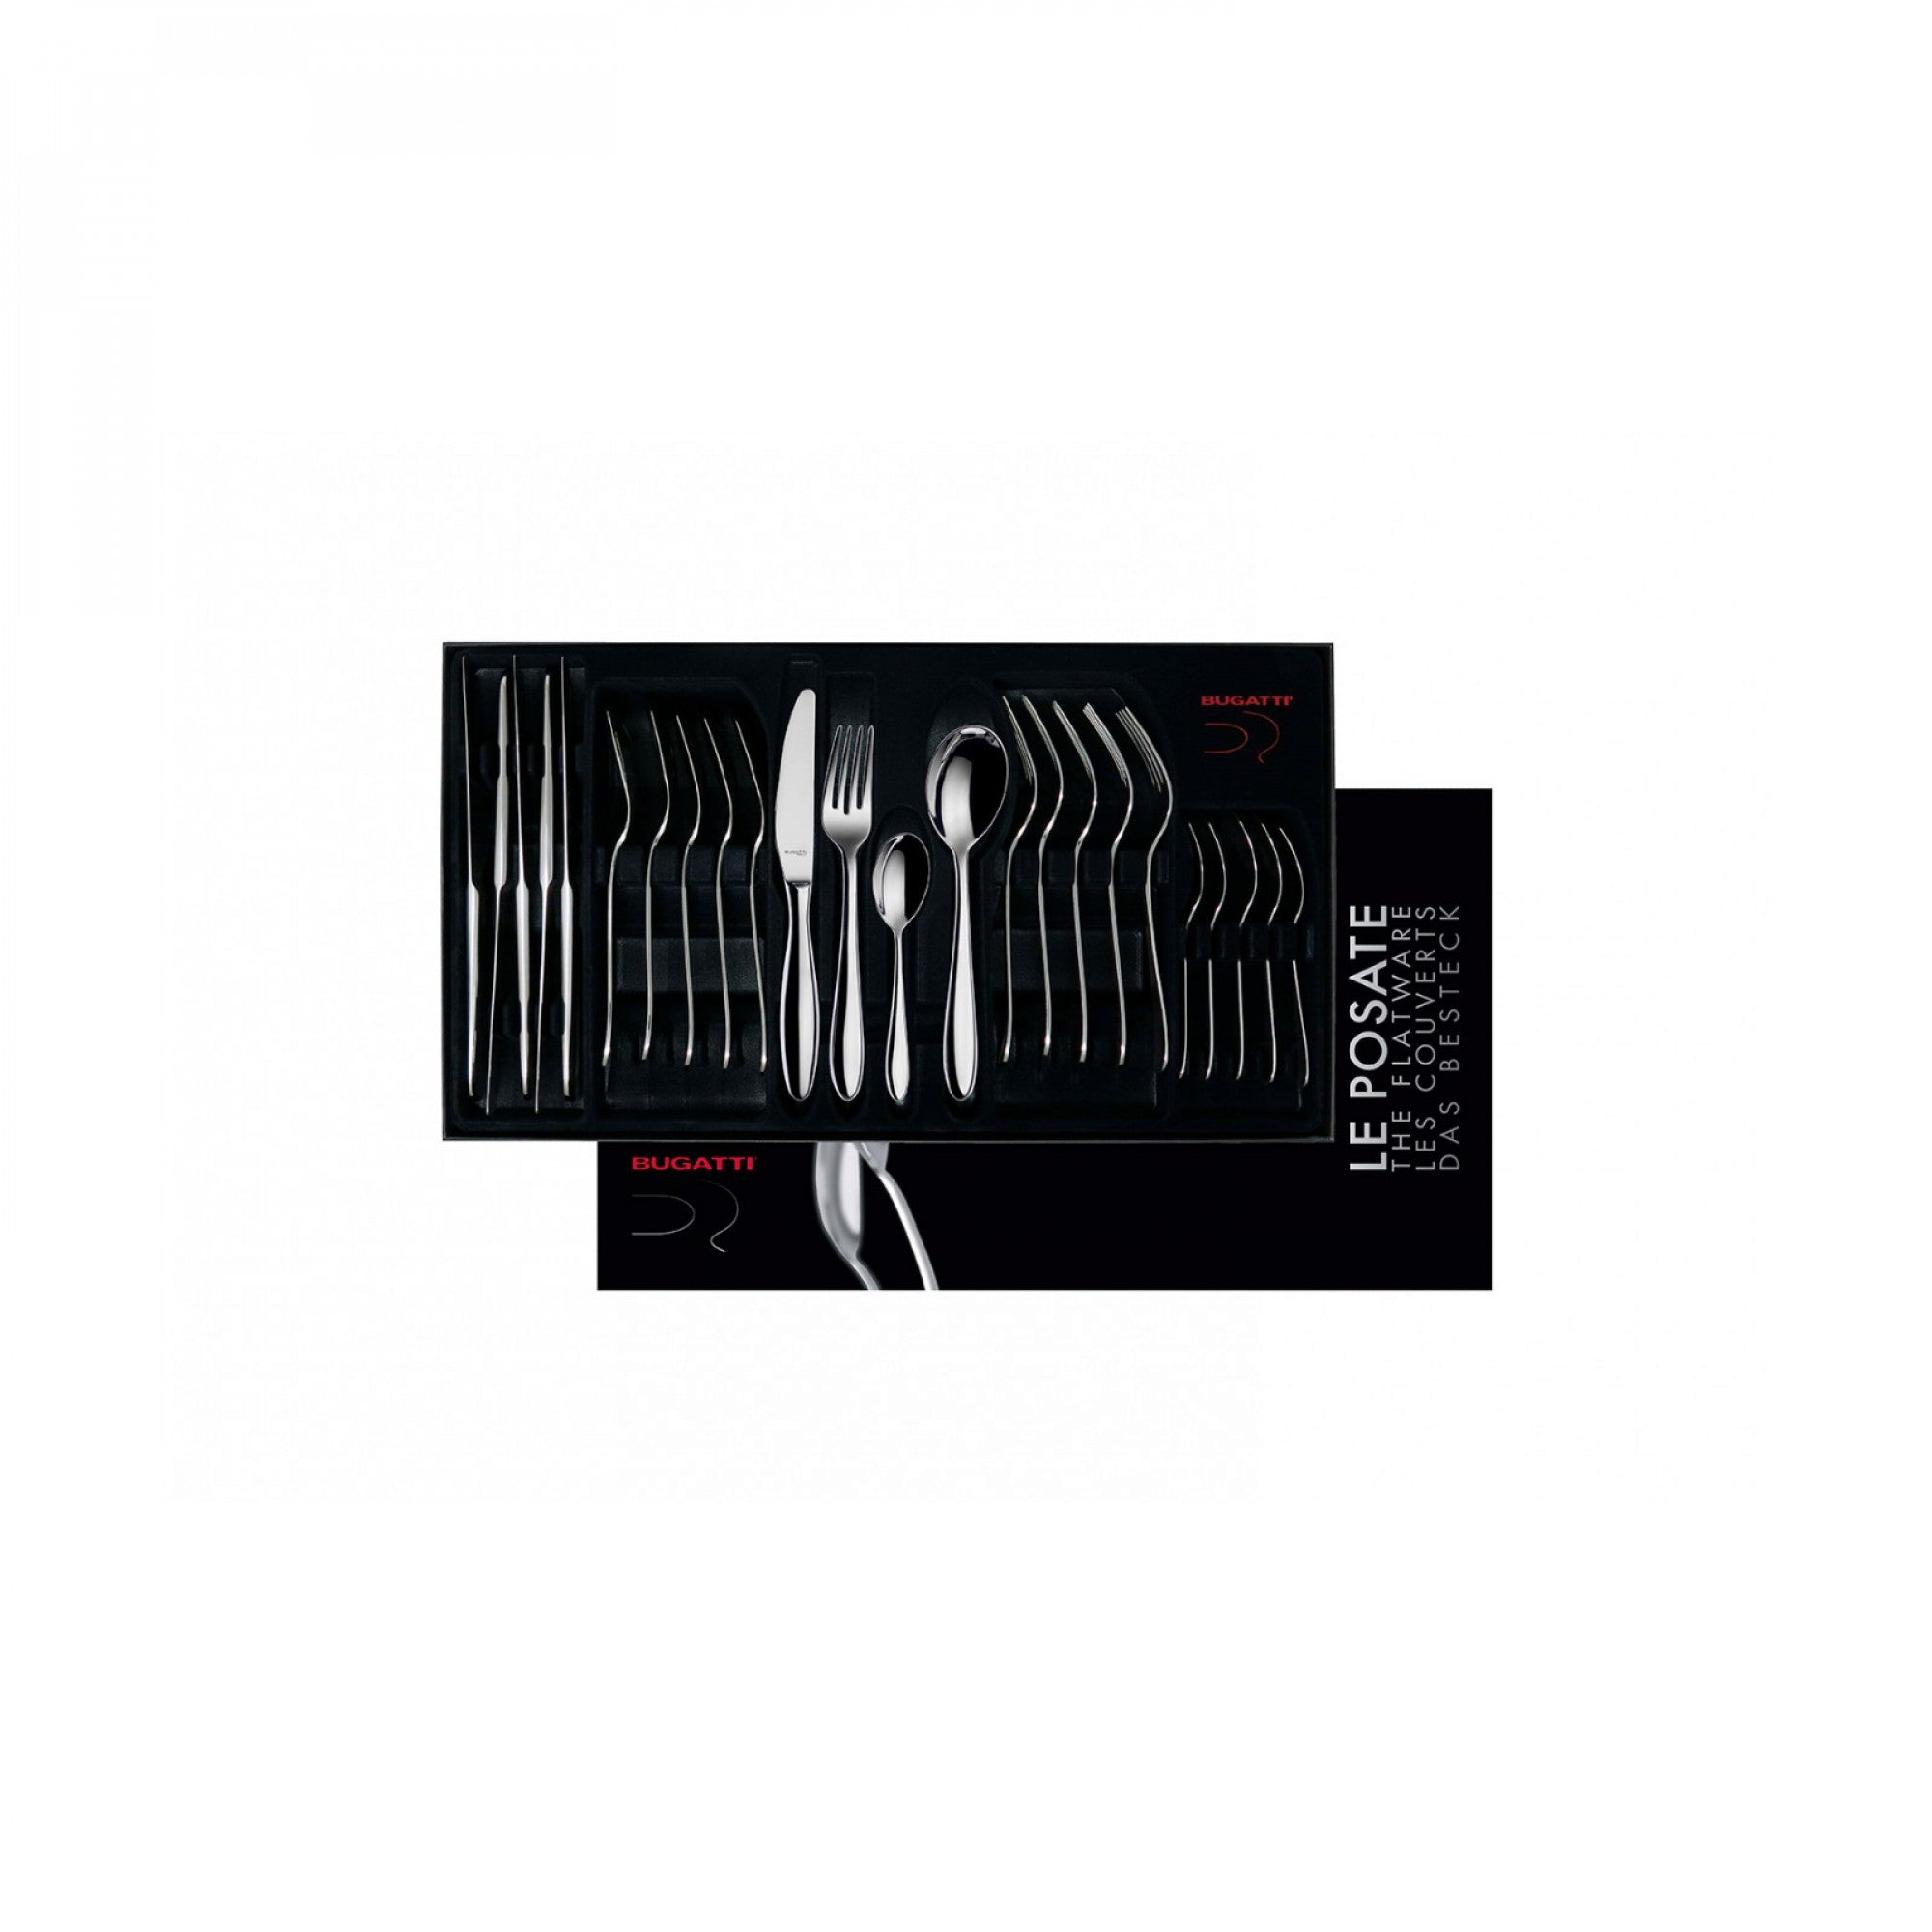 BUGATTI, Fresco, 24-piece cutlery set in 18/10 stainless steel